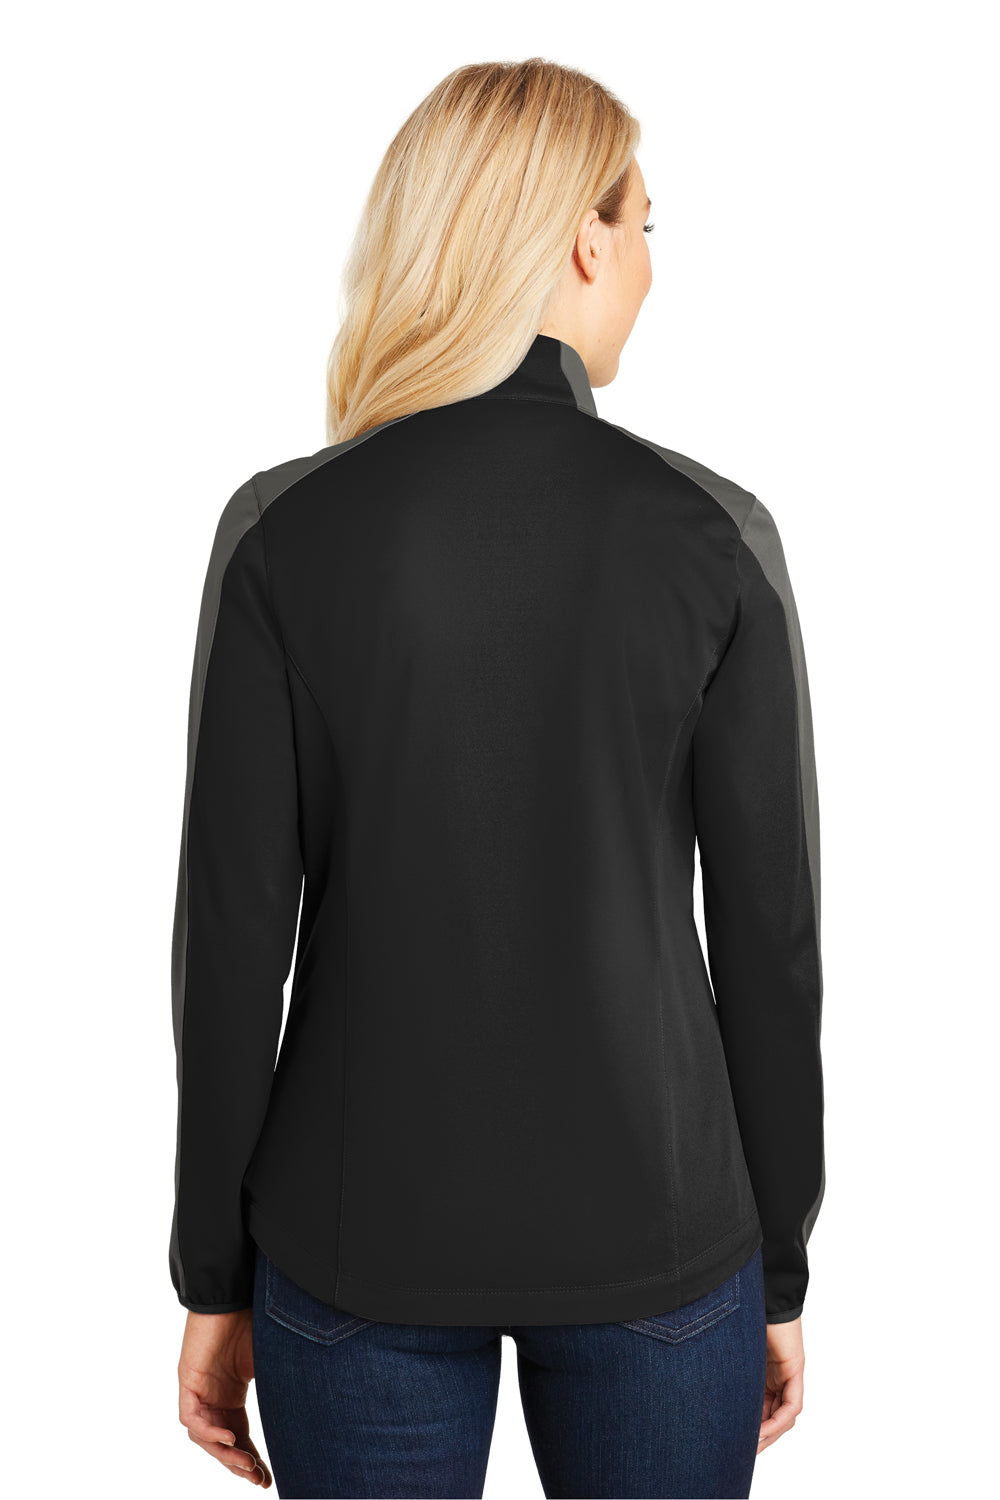 Port Authority L718 Womens Active Wind & Water Resistant Full Zip Jacket Black/Grey Back